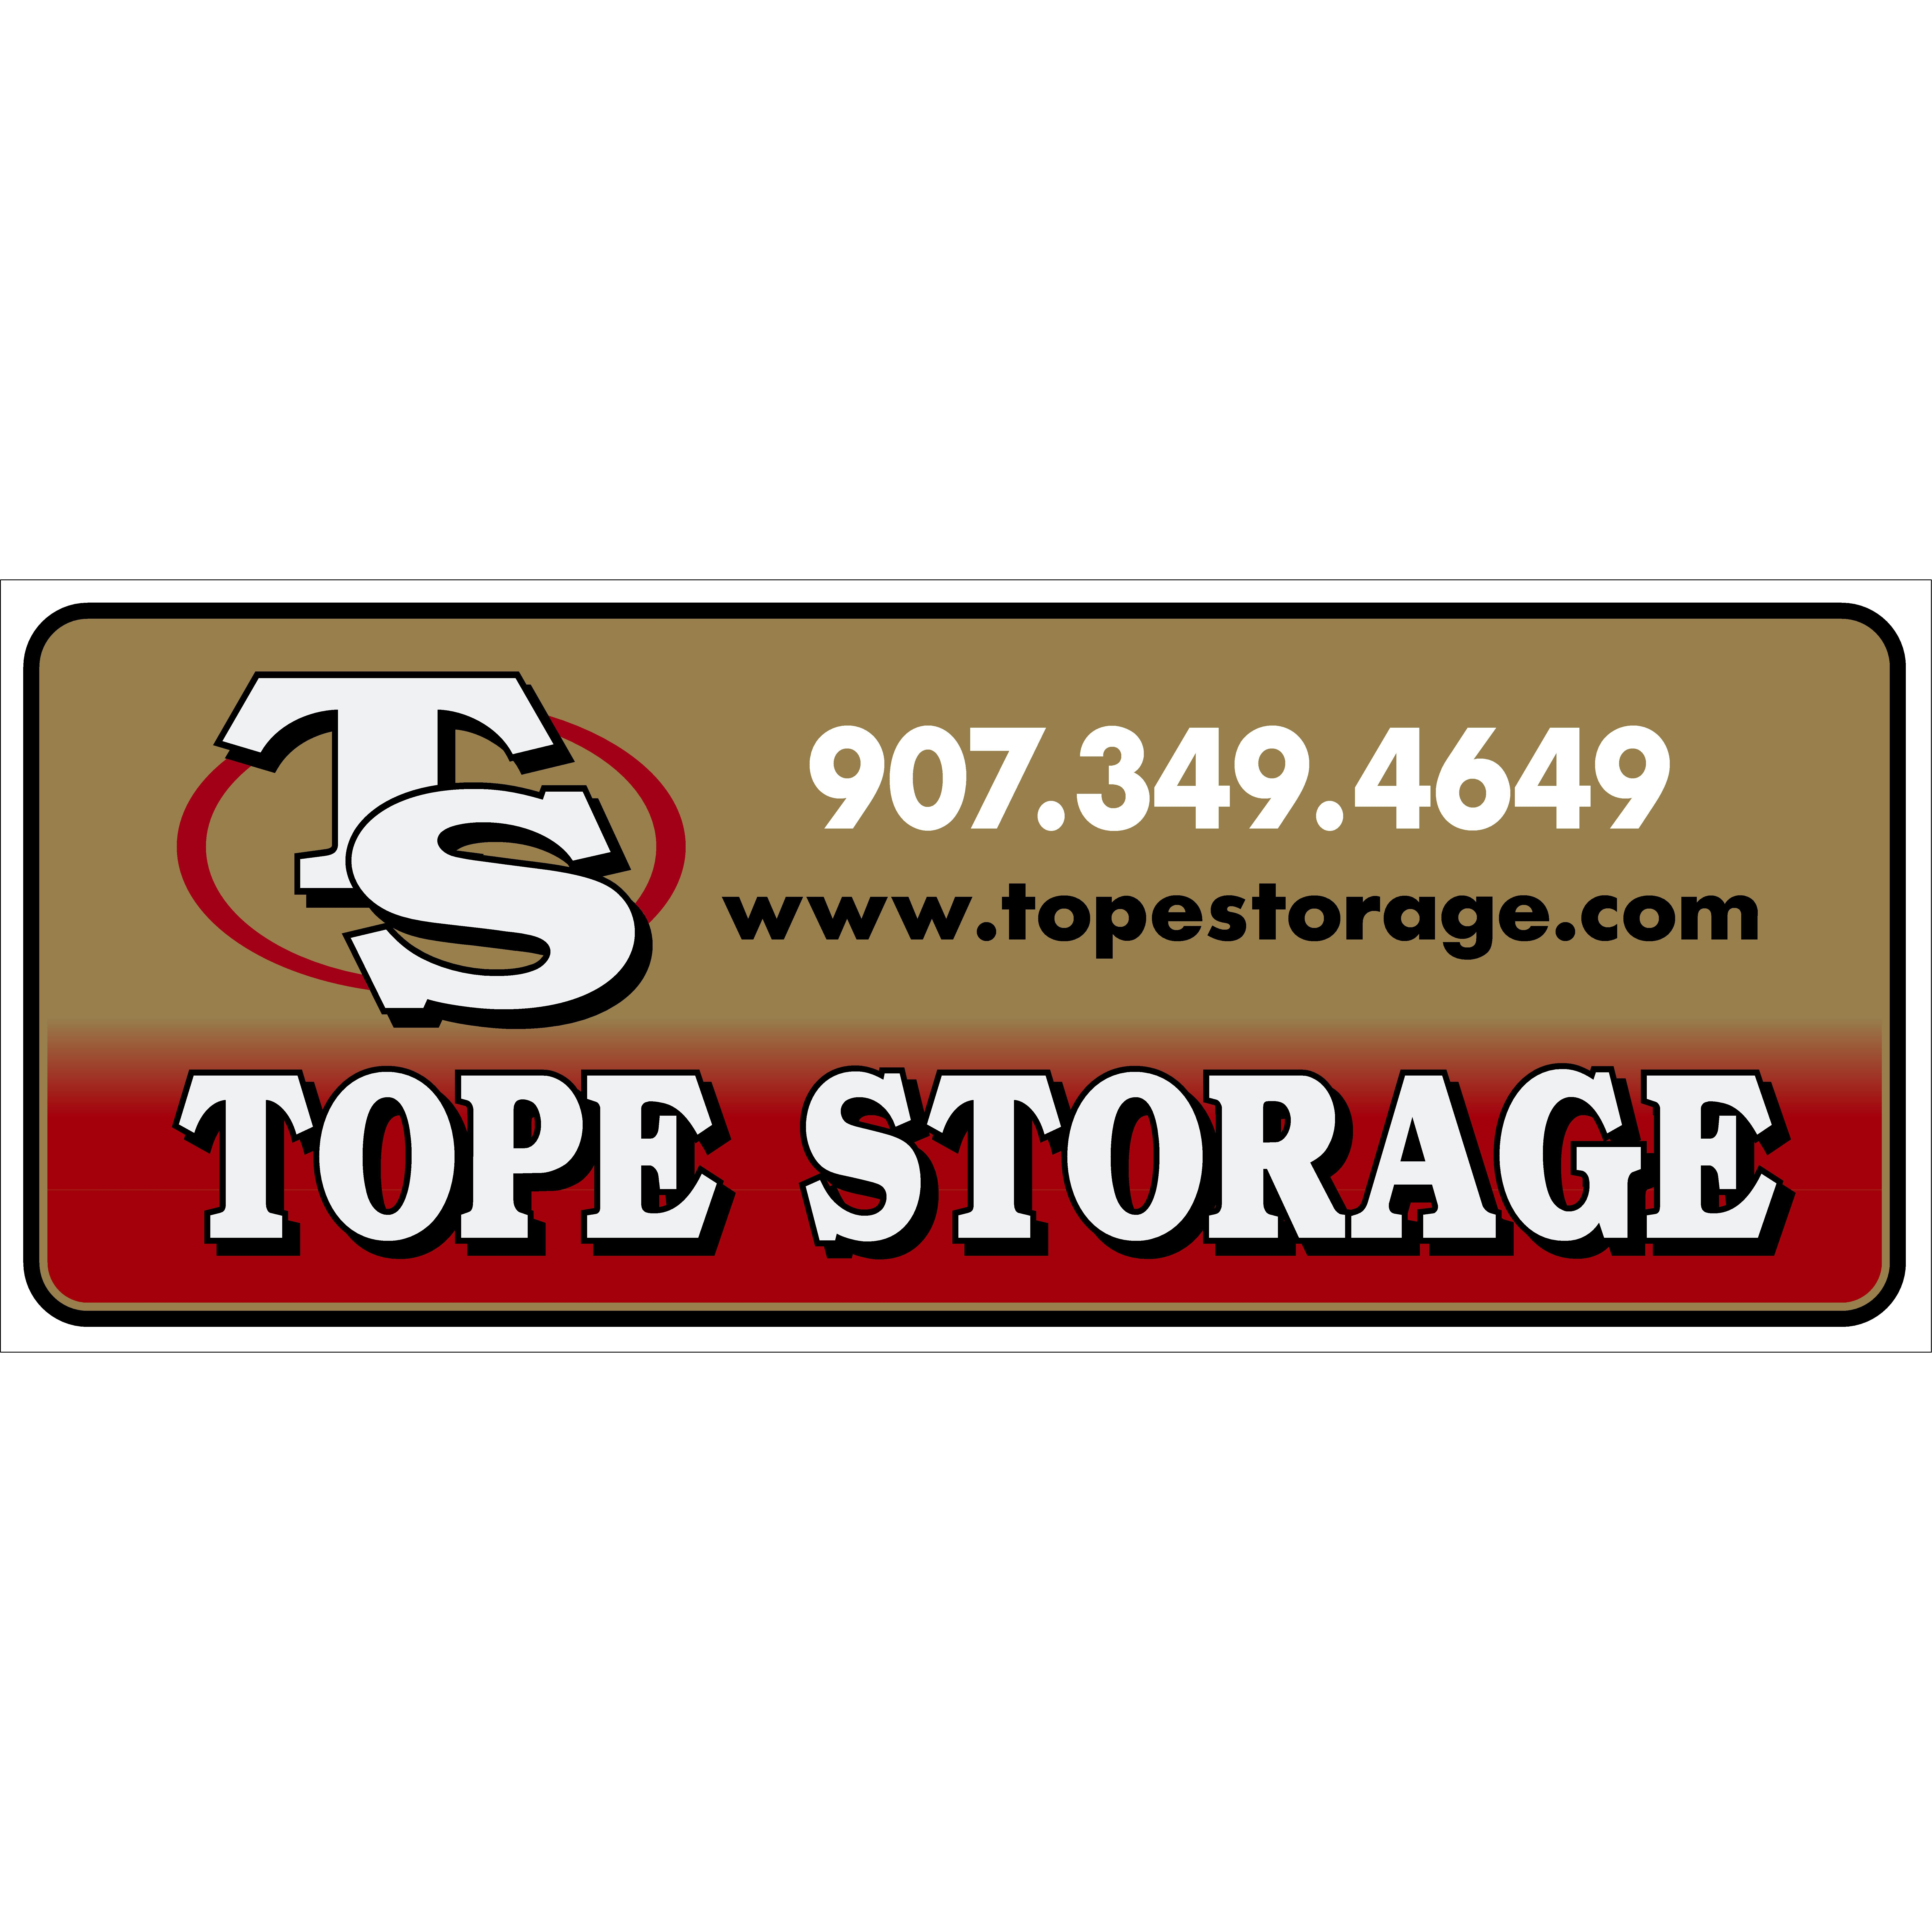 Tope Storage - Anchorage, AK 99518 - (907)349-4649 | ShowMeLocal.com